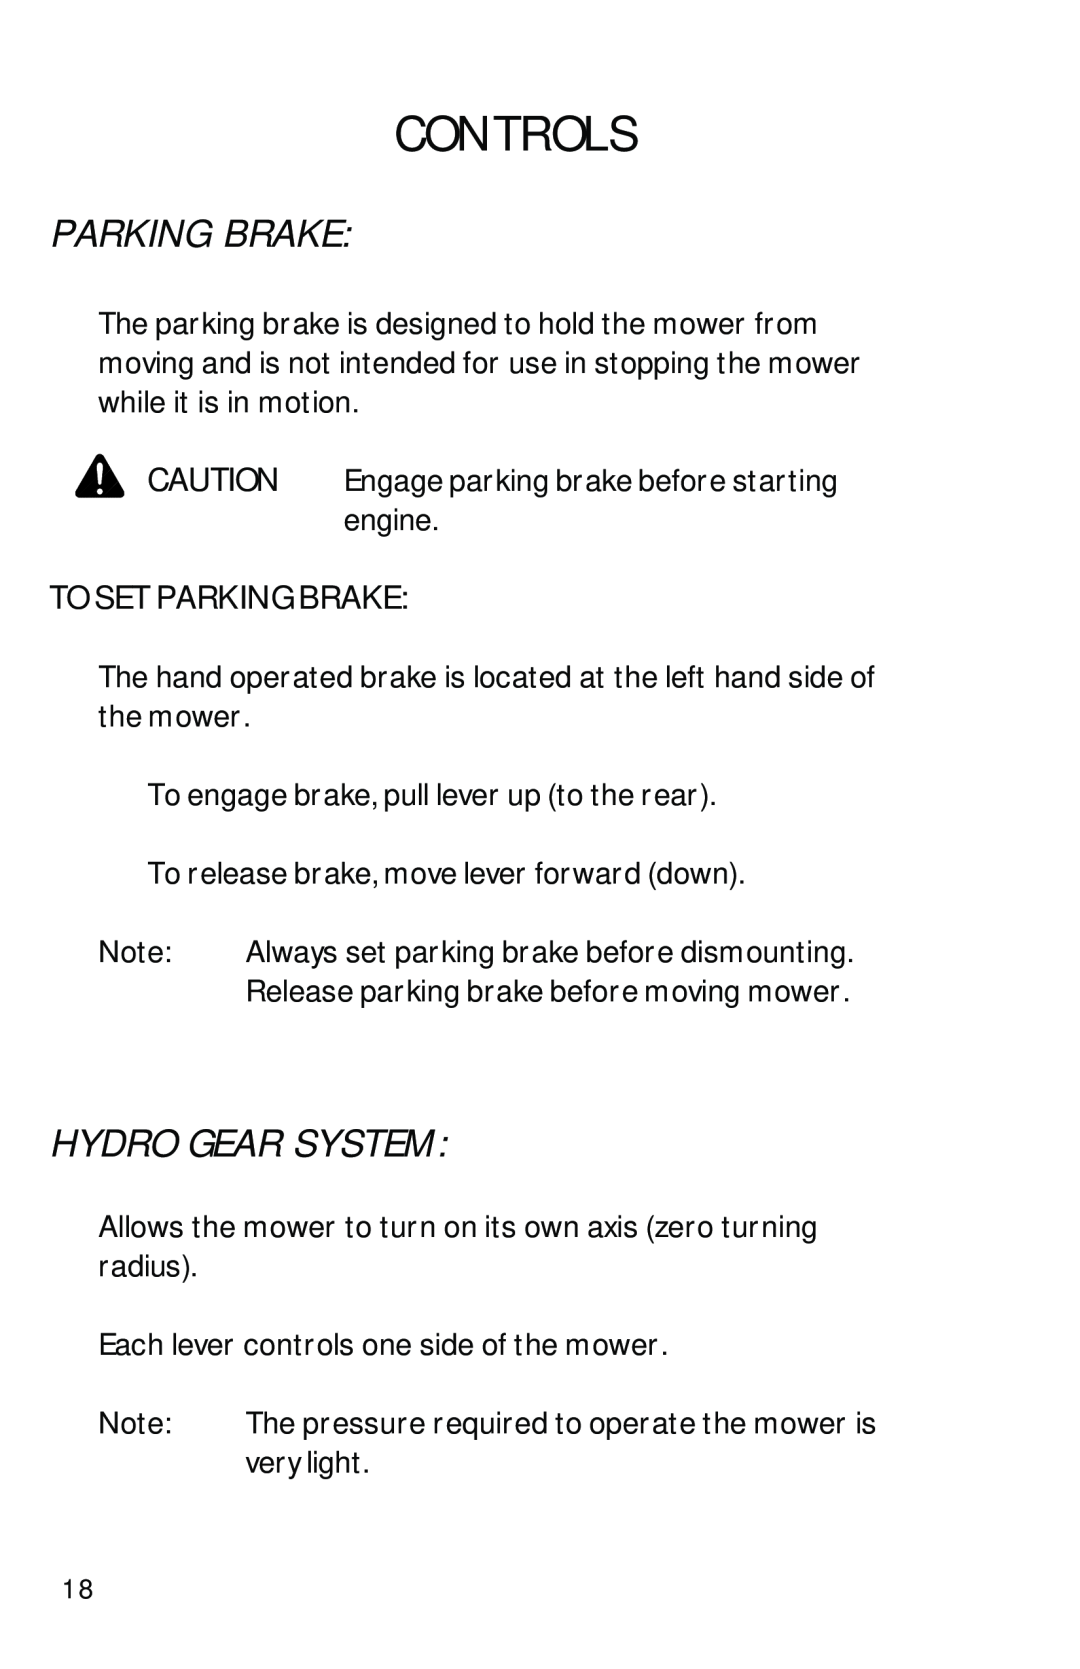 Dixon 1950-2300 Series manual Hydro Gear System, To Set Parking Brake, Controls 